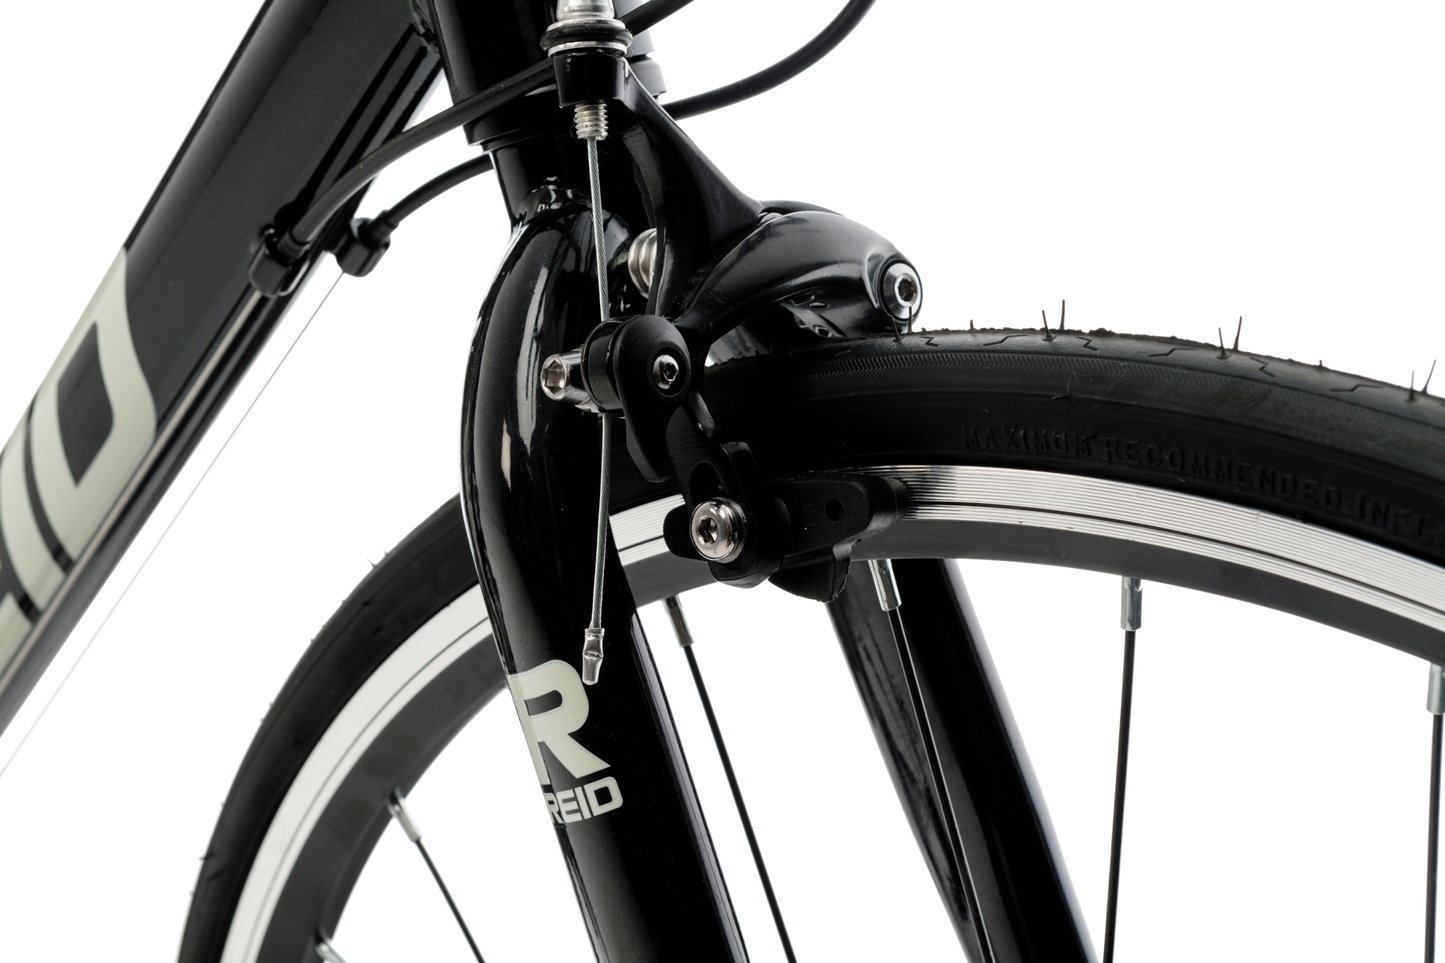 Rapid Flatbar Road Bike in Black showing front promax dual pivot caliper brakes from Reid Cycles Australia